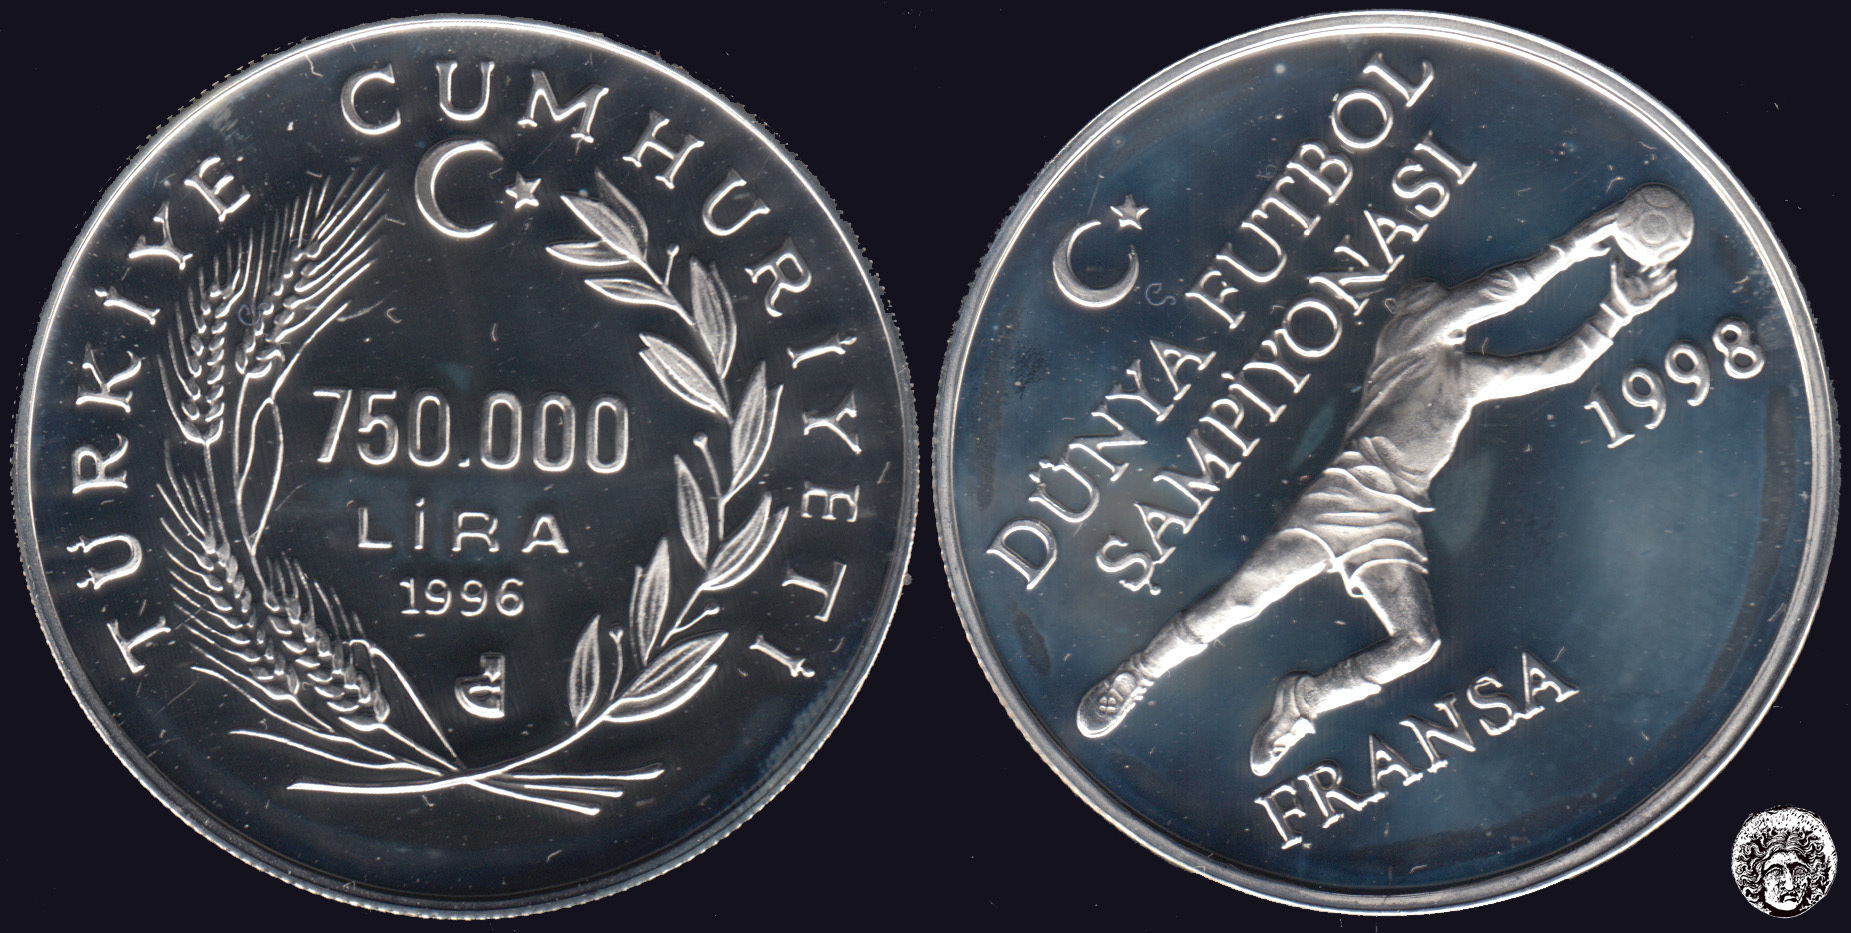 TURQUIA - TURKEY. 750000 LIRA DE 1996. PLATA 0.925. (S/C)